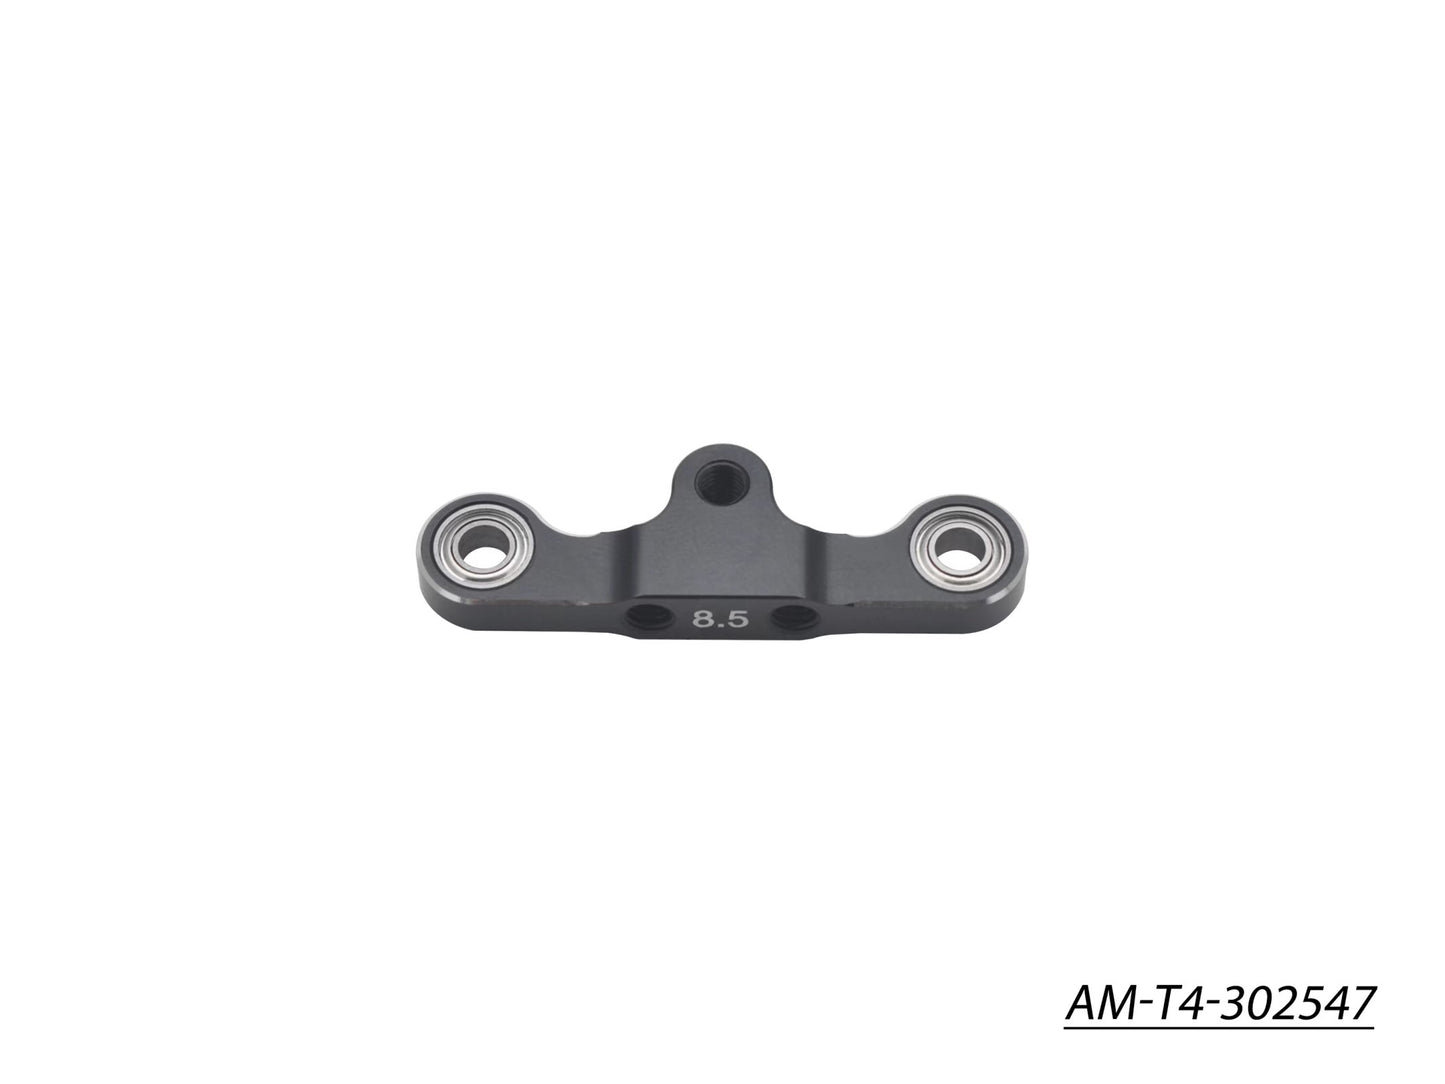 T4 Alu Steering Plate 8.5mm For Dual Servo Saver Black (AM-T4-302547)